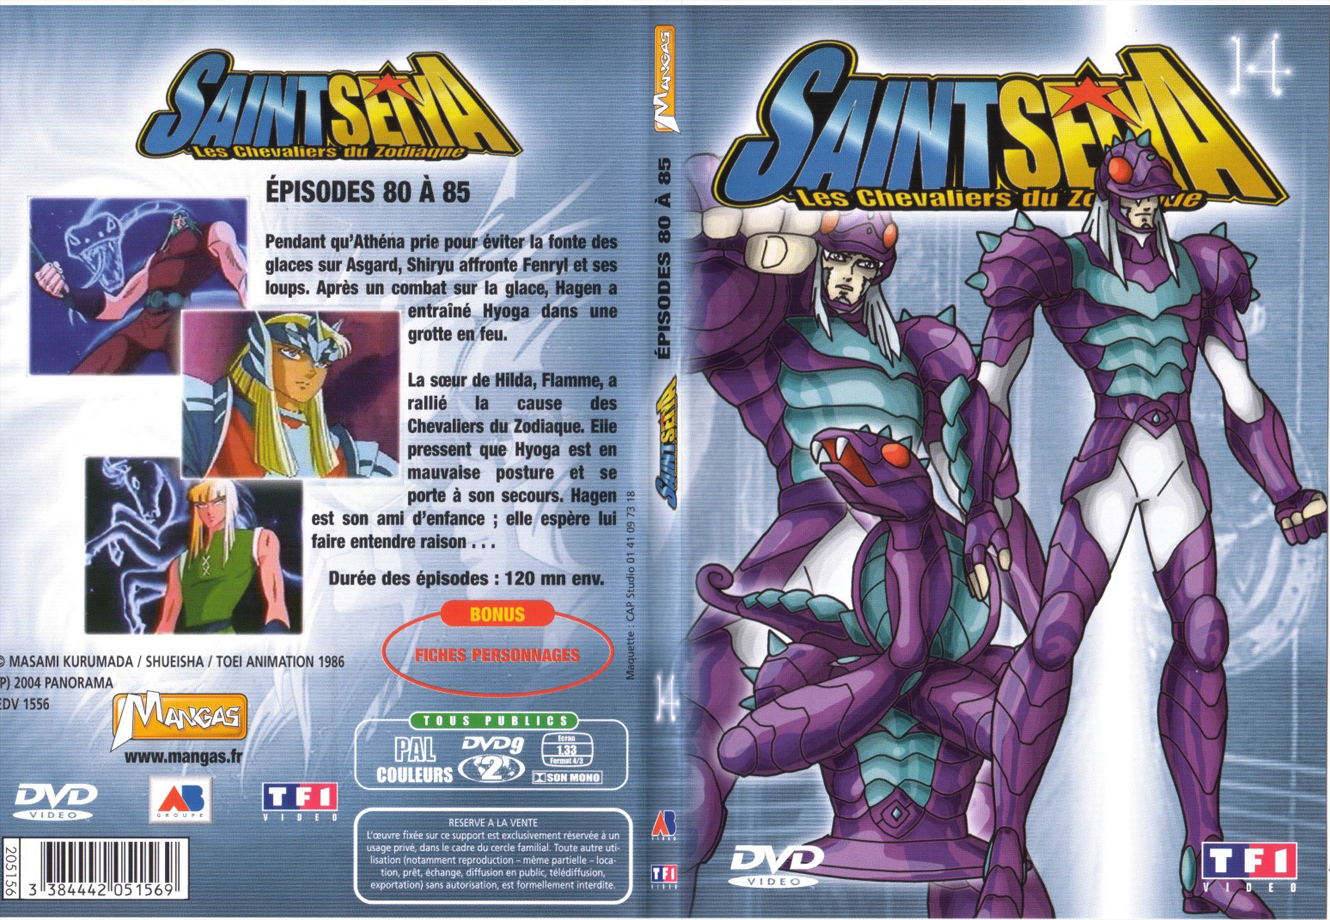 Jaquette DVD Saint Seiya vol 14 - SLIM